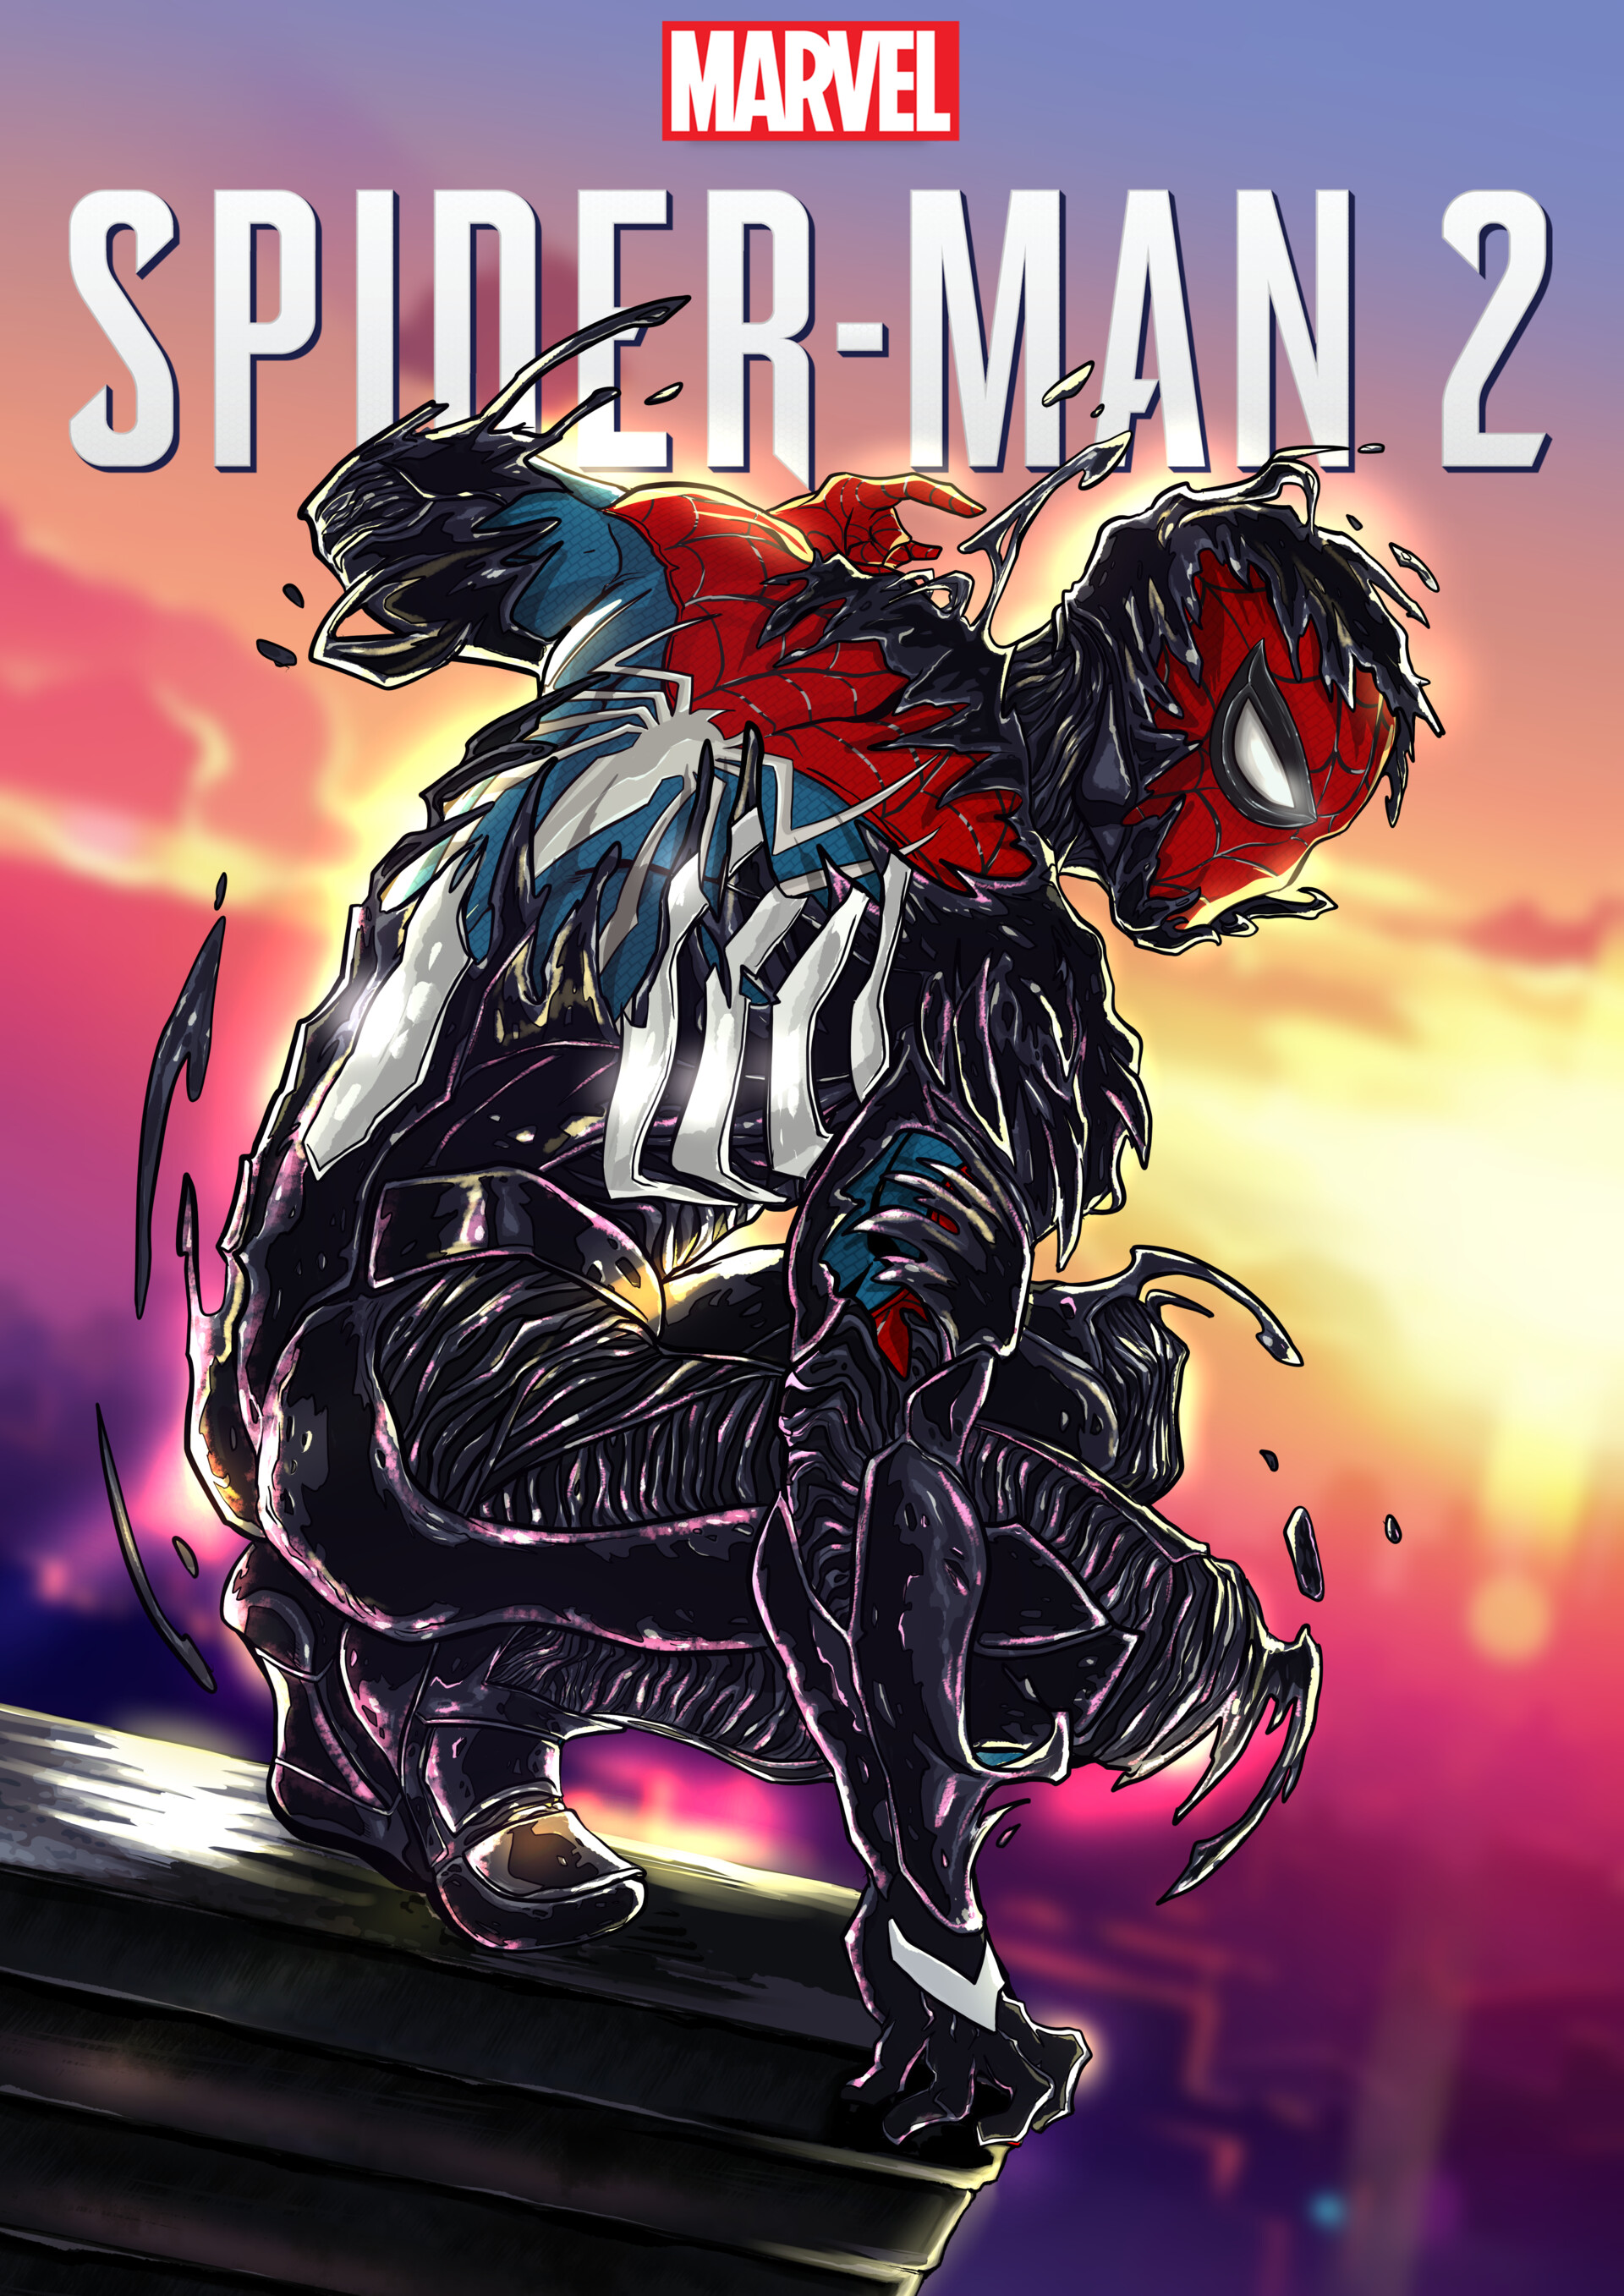 Spiderman 2 ps5 poster illustration by Visualsofazmat : r/SpidermanPS4